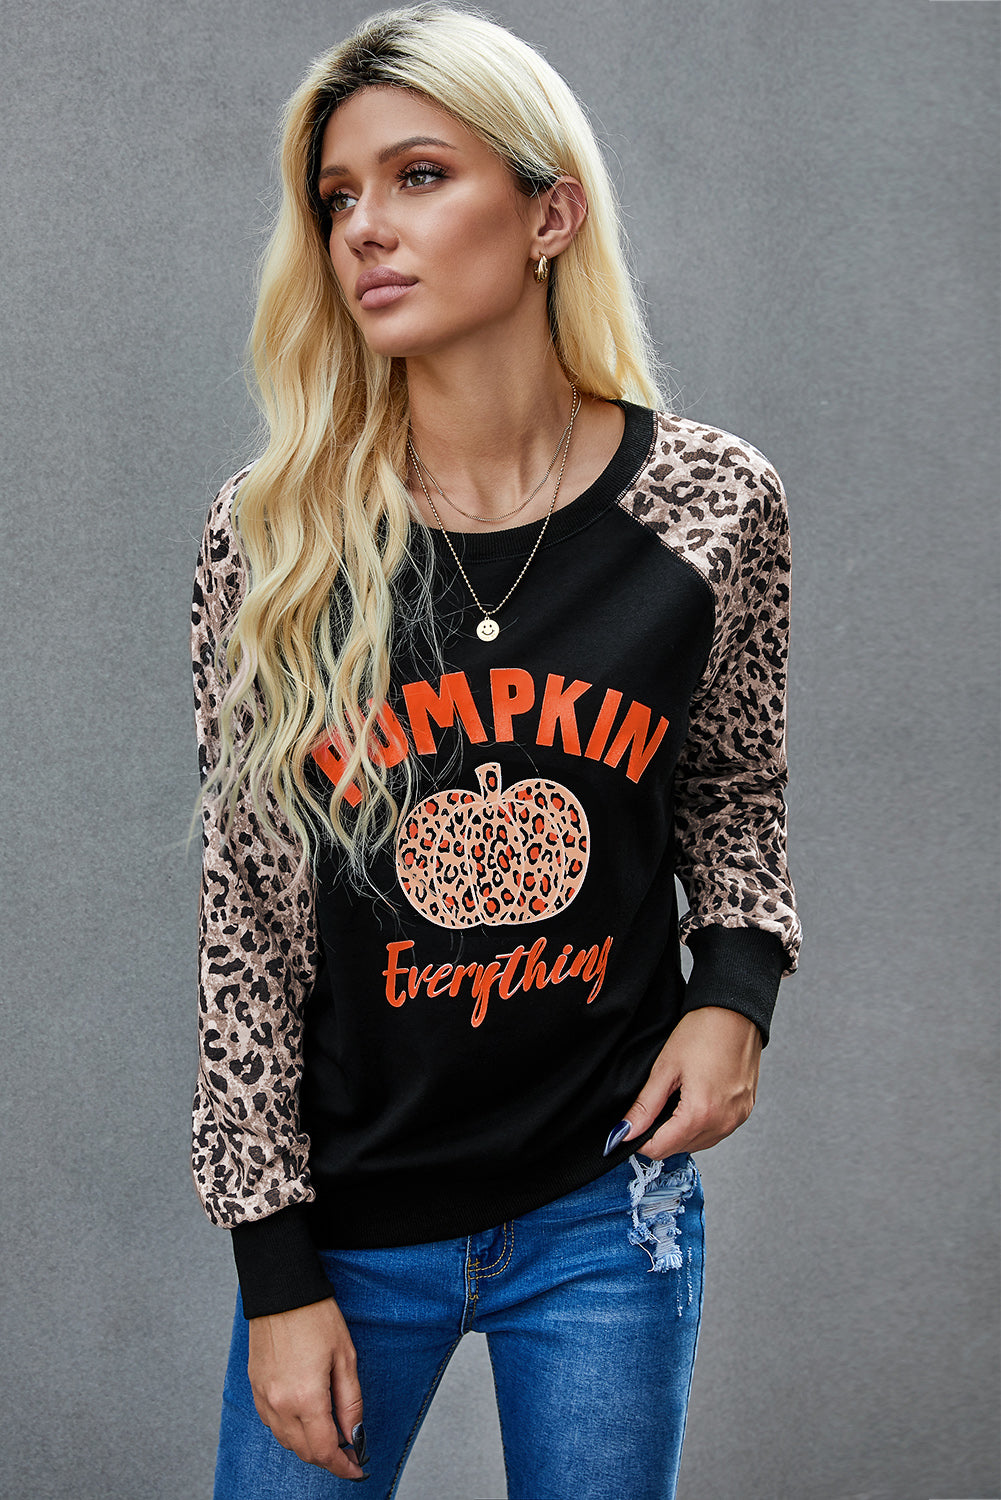 Contrast Leopard Pumpkin Element Print Top